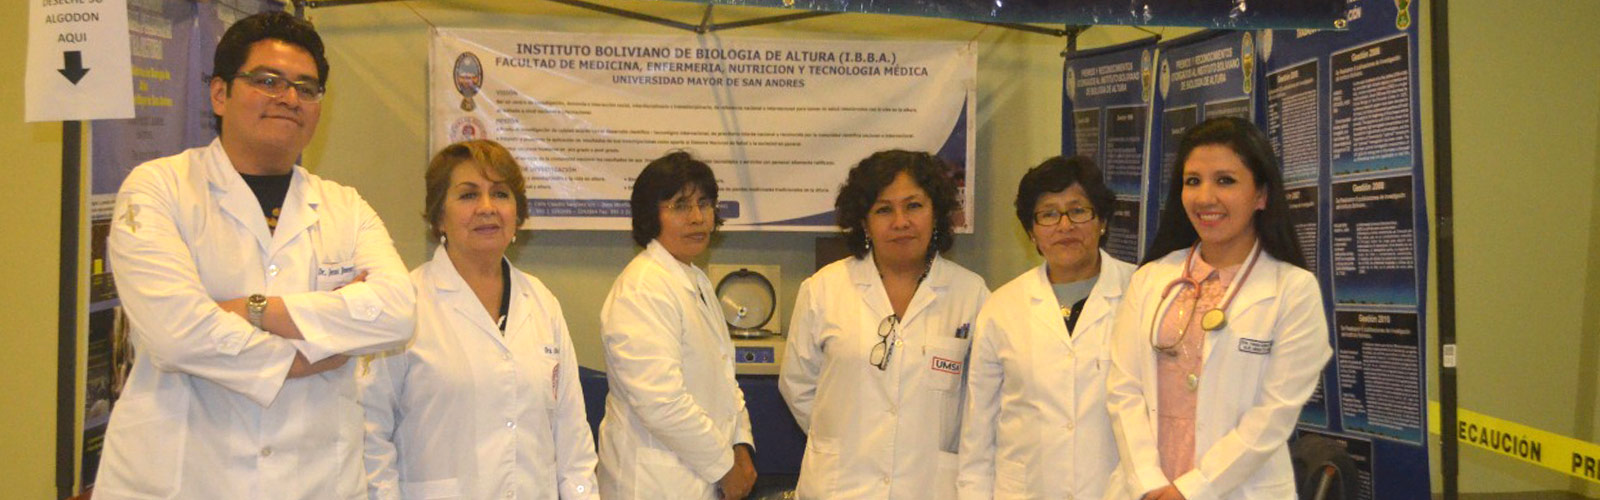 IBBA - Dr. Jesús Jiménez, Dra. Diva Bellido, Lic. Martha Aguilar, Lic. Catherine Romero, Sra. Ivonne Contreras, Dra. Vannia Espinoza